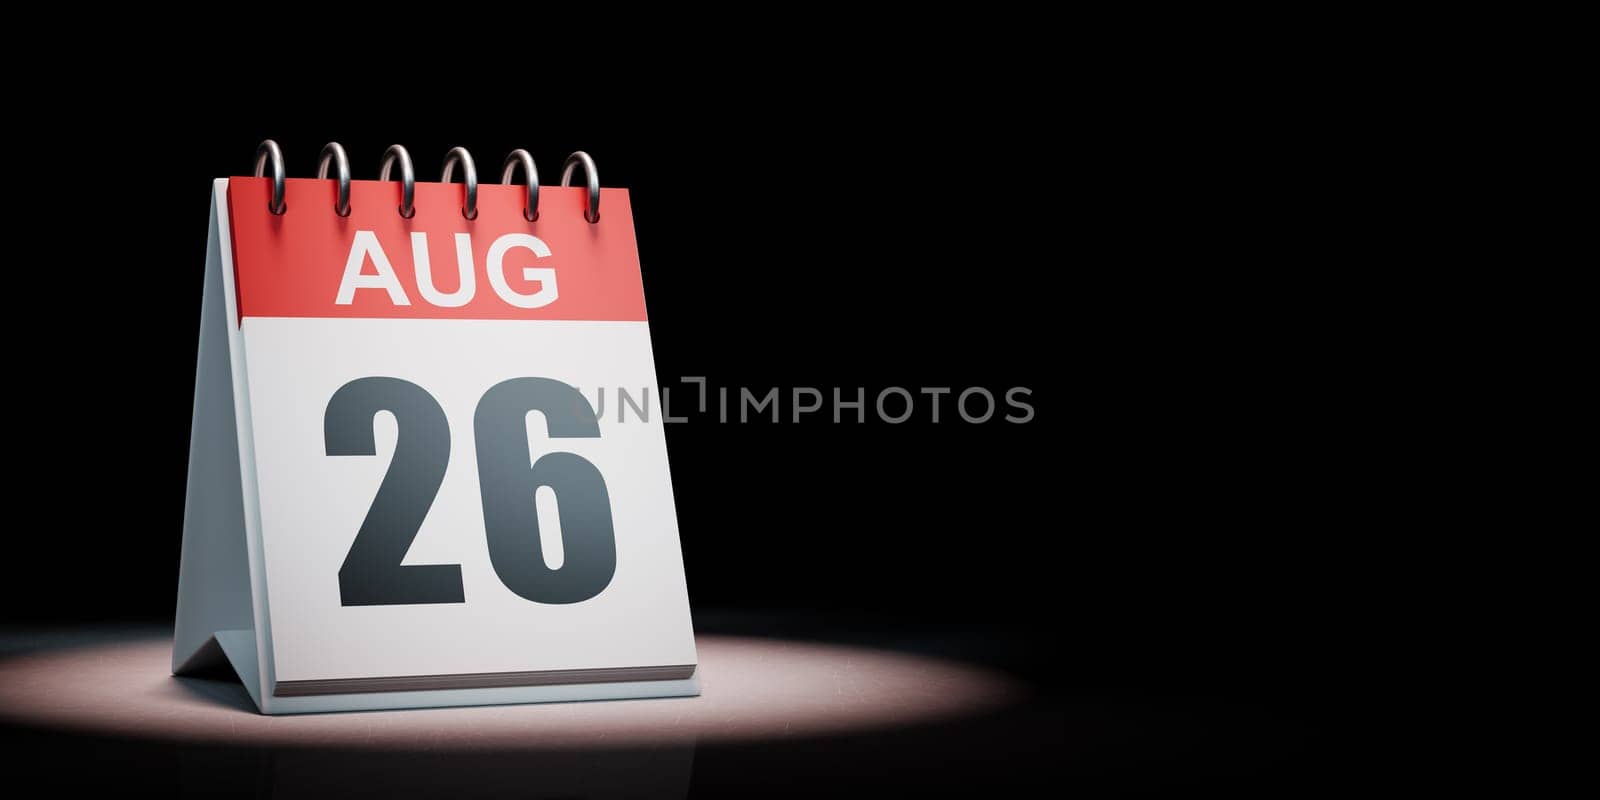 August 26 Calendar Spotlighted on Black Background by make